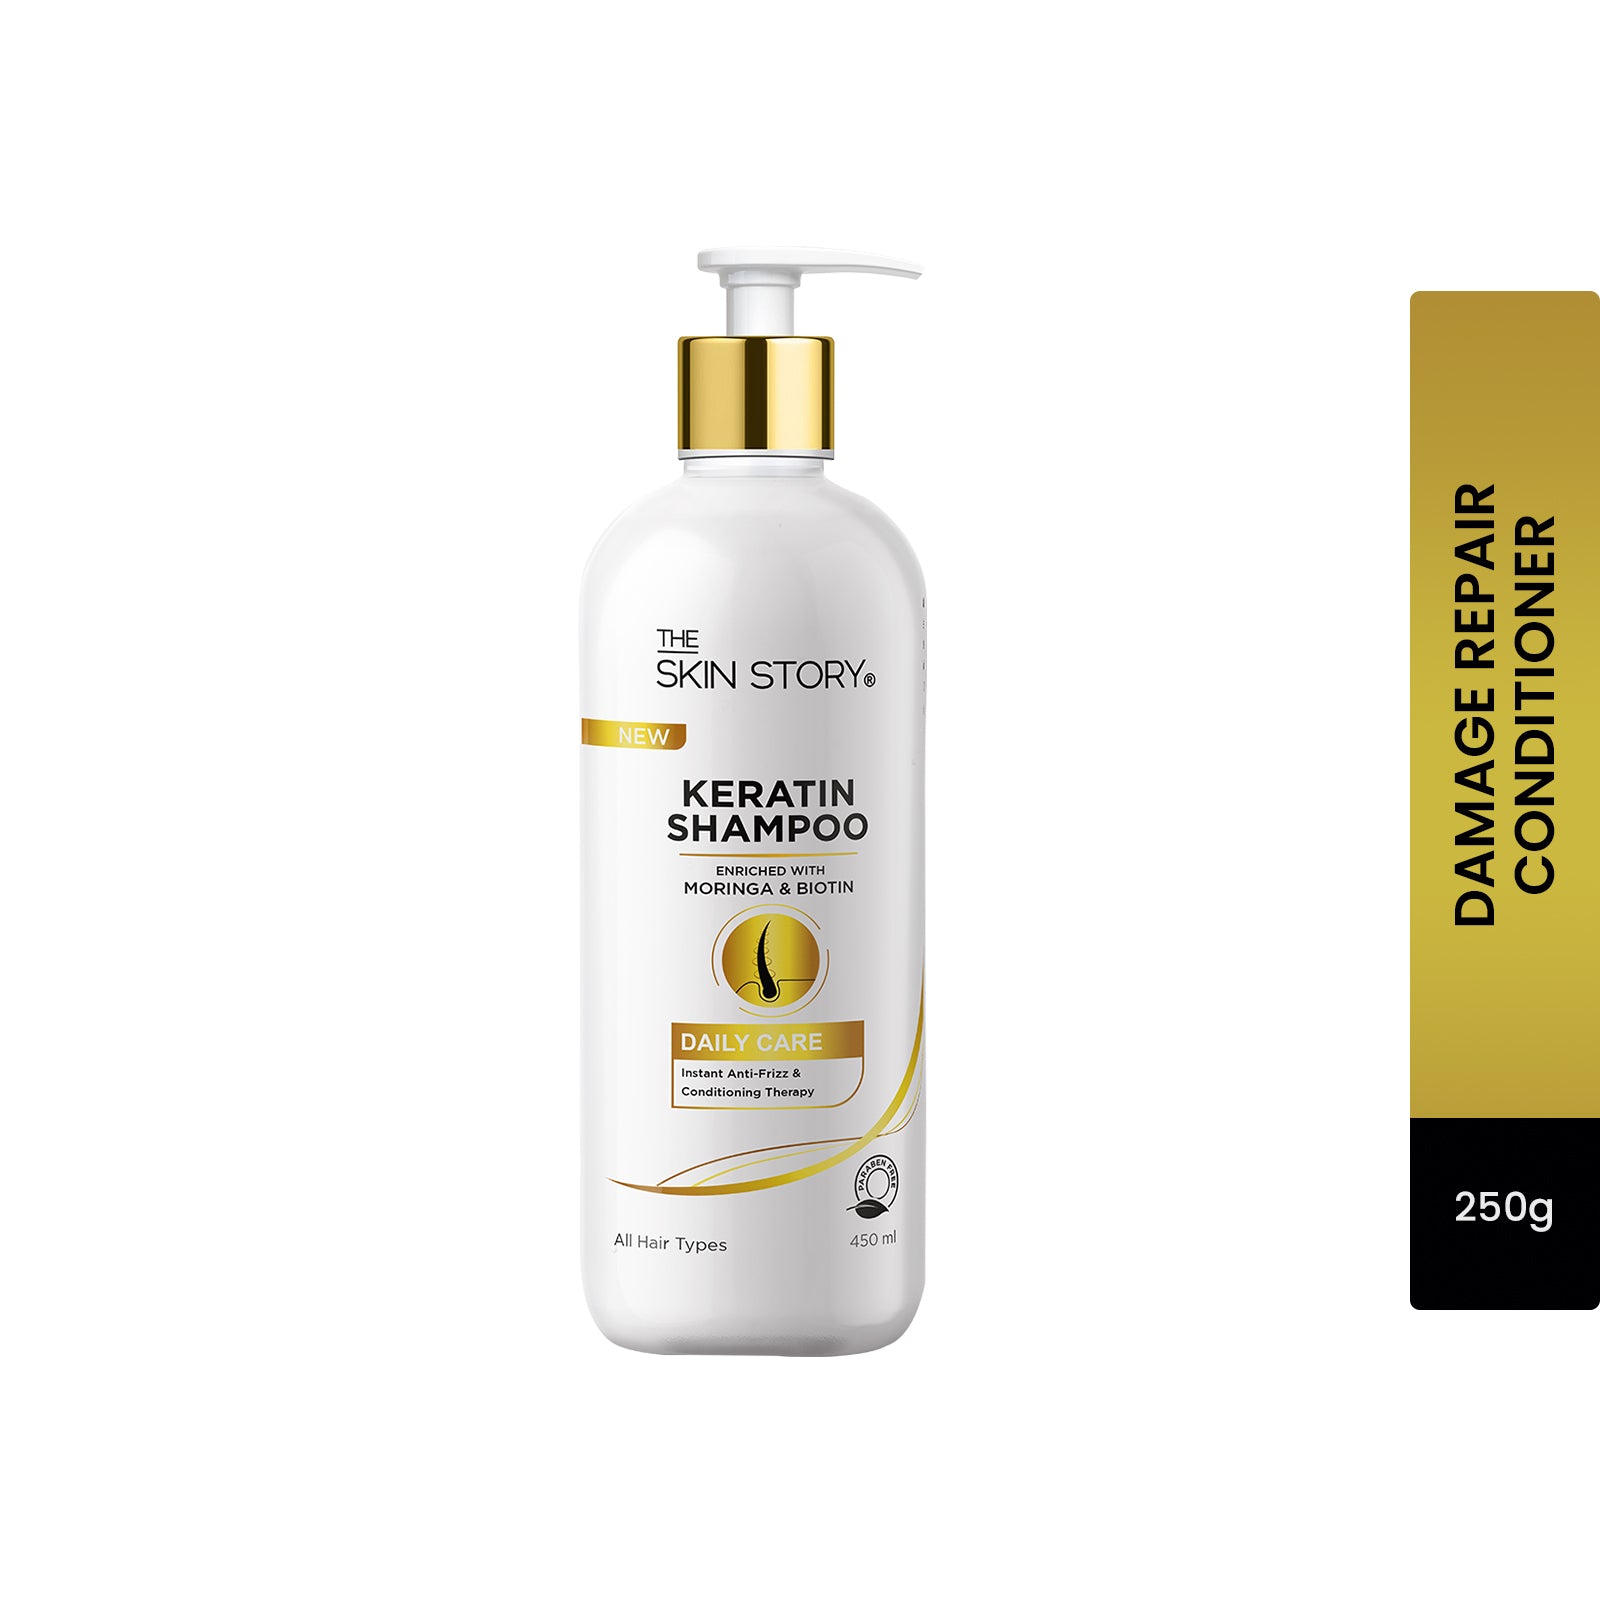 The Skin Story Keratin Shampoo For Women| Soft & Anti Frizz Hair | Split End & Damage Repair | All Hair Types| Paraben Free Shampoo | Volume Pack | 450ml